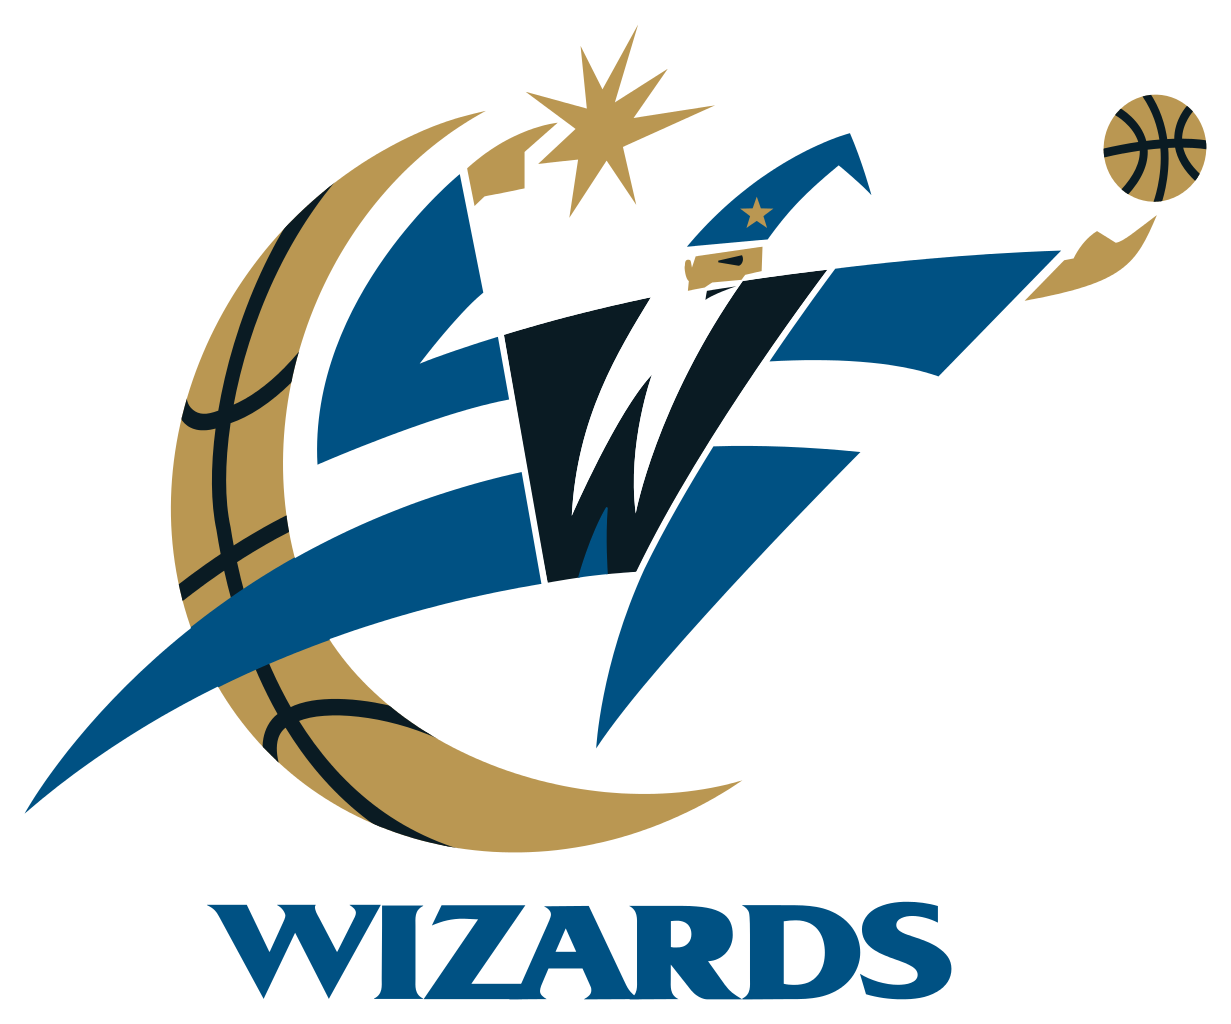 New Washington Wizards logo does not include a wizard - Washington ...